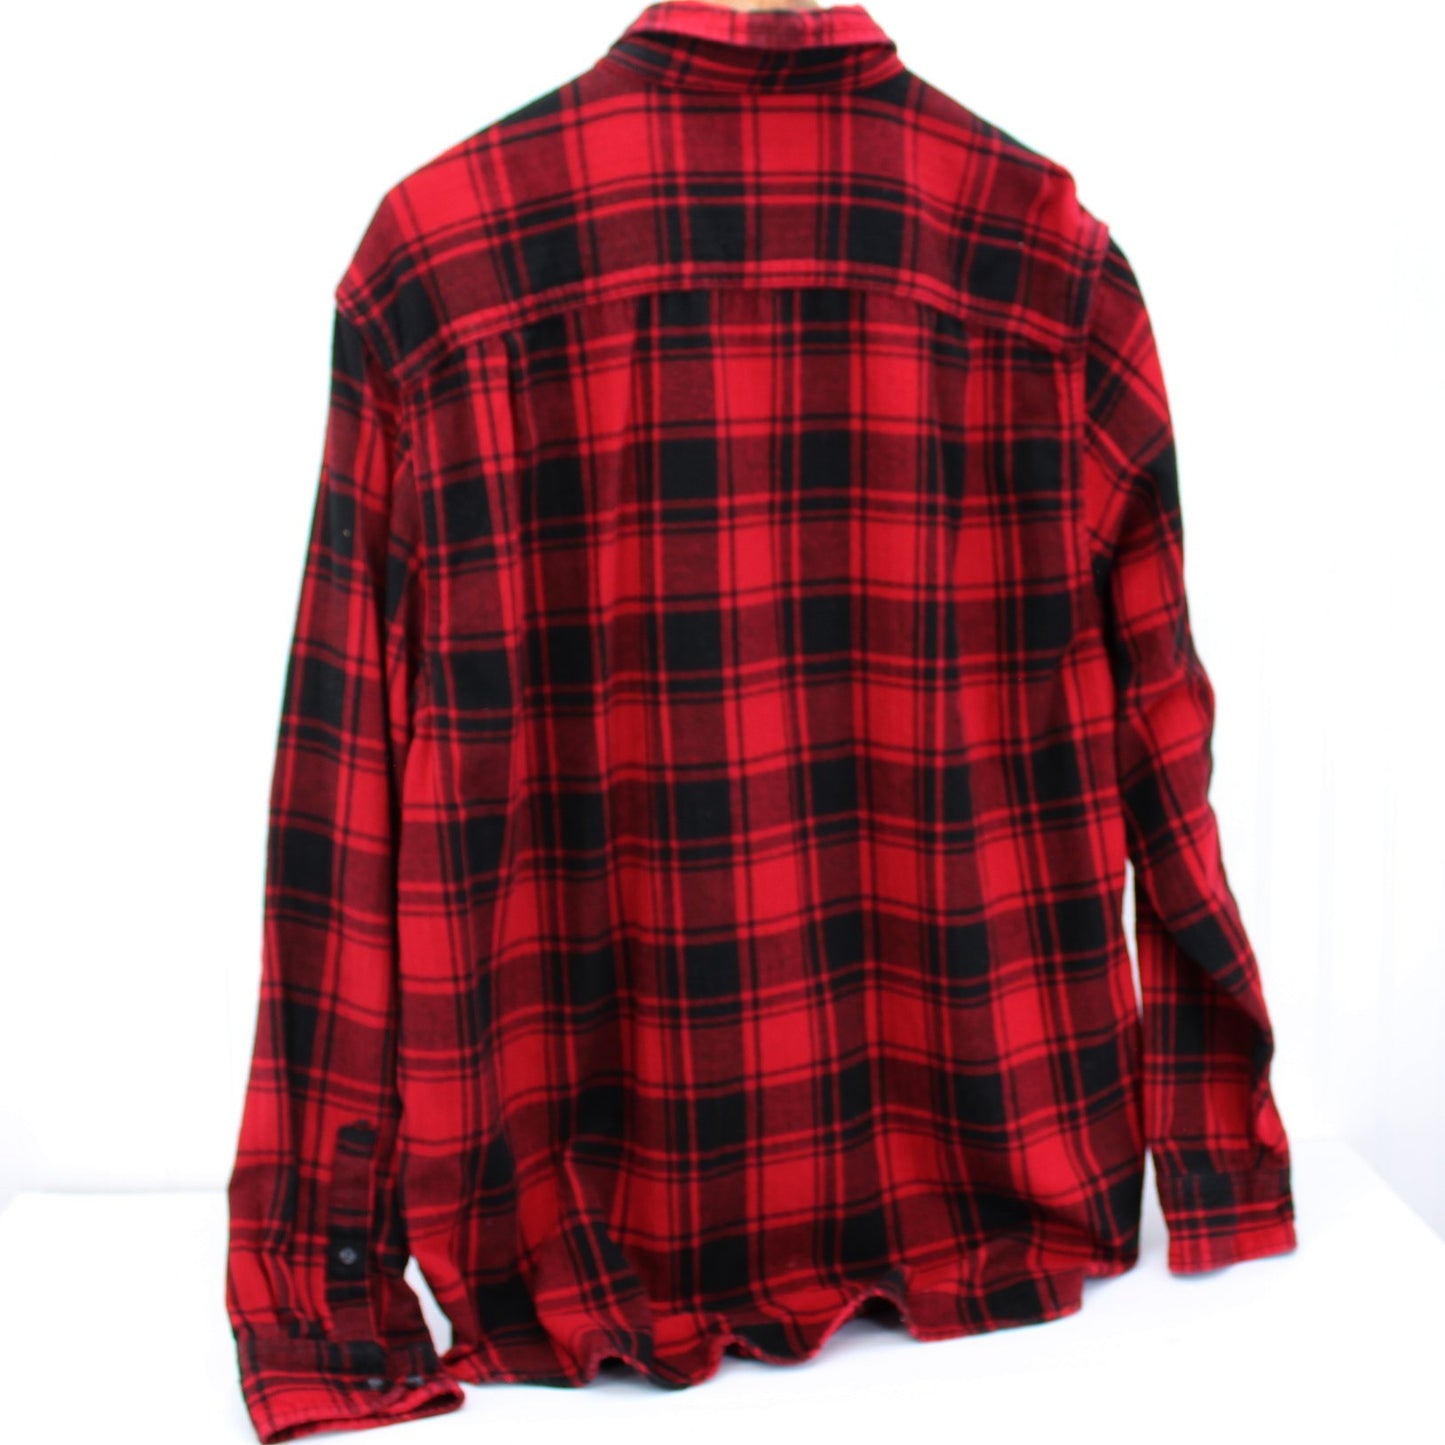 George Cotton Flannel Shirt Long Sleeve 2XL 50/52 Red Black Plaid  back view yoke design